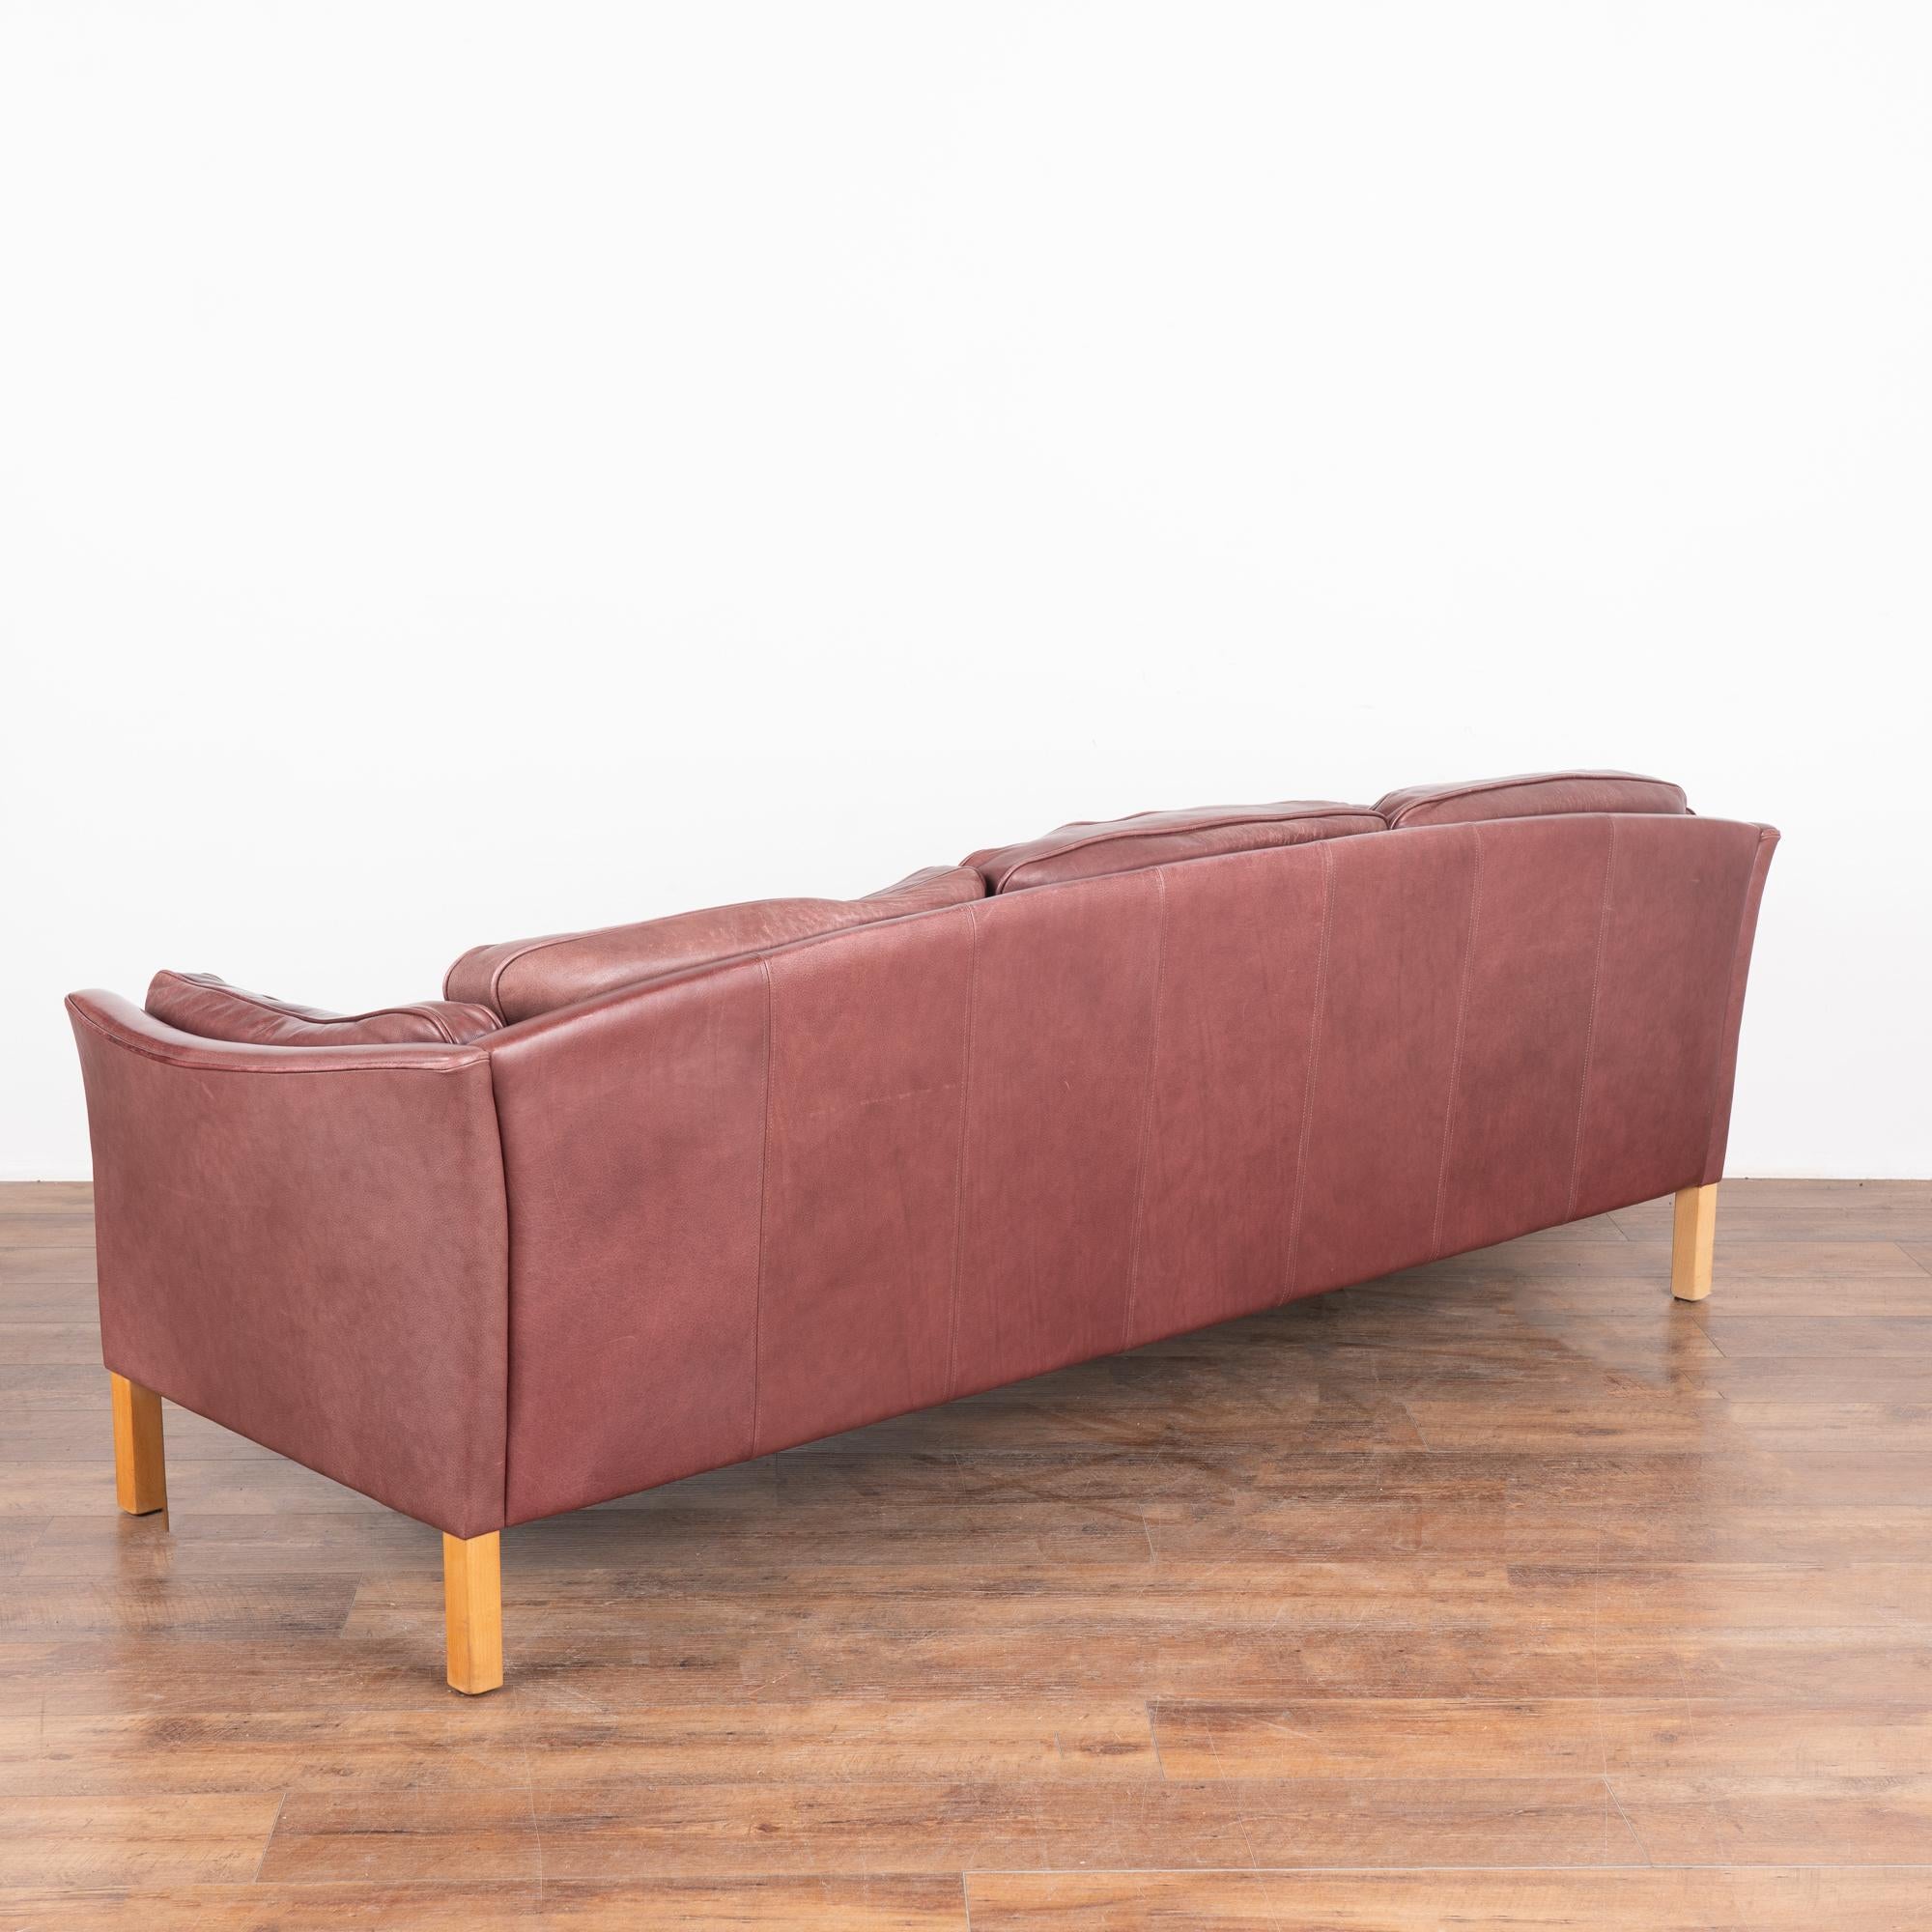 Set of Mid Century Purple Leather 3 Seat Sofa & 2 Seat Loveseat, Denmark 1960-70 For Sale 3